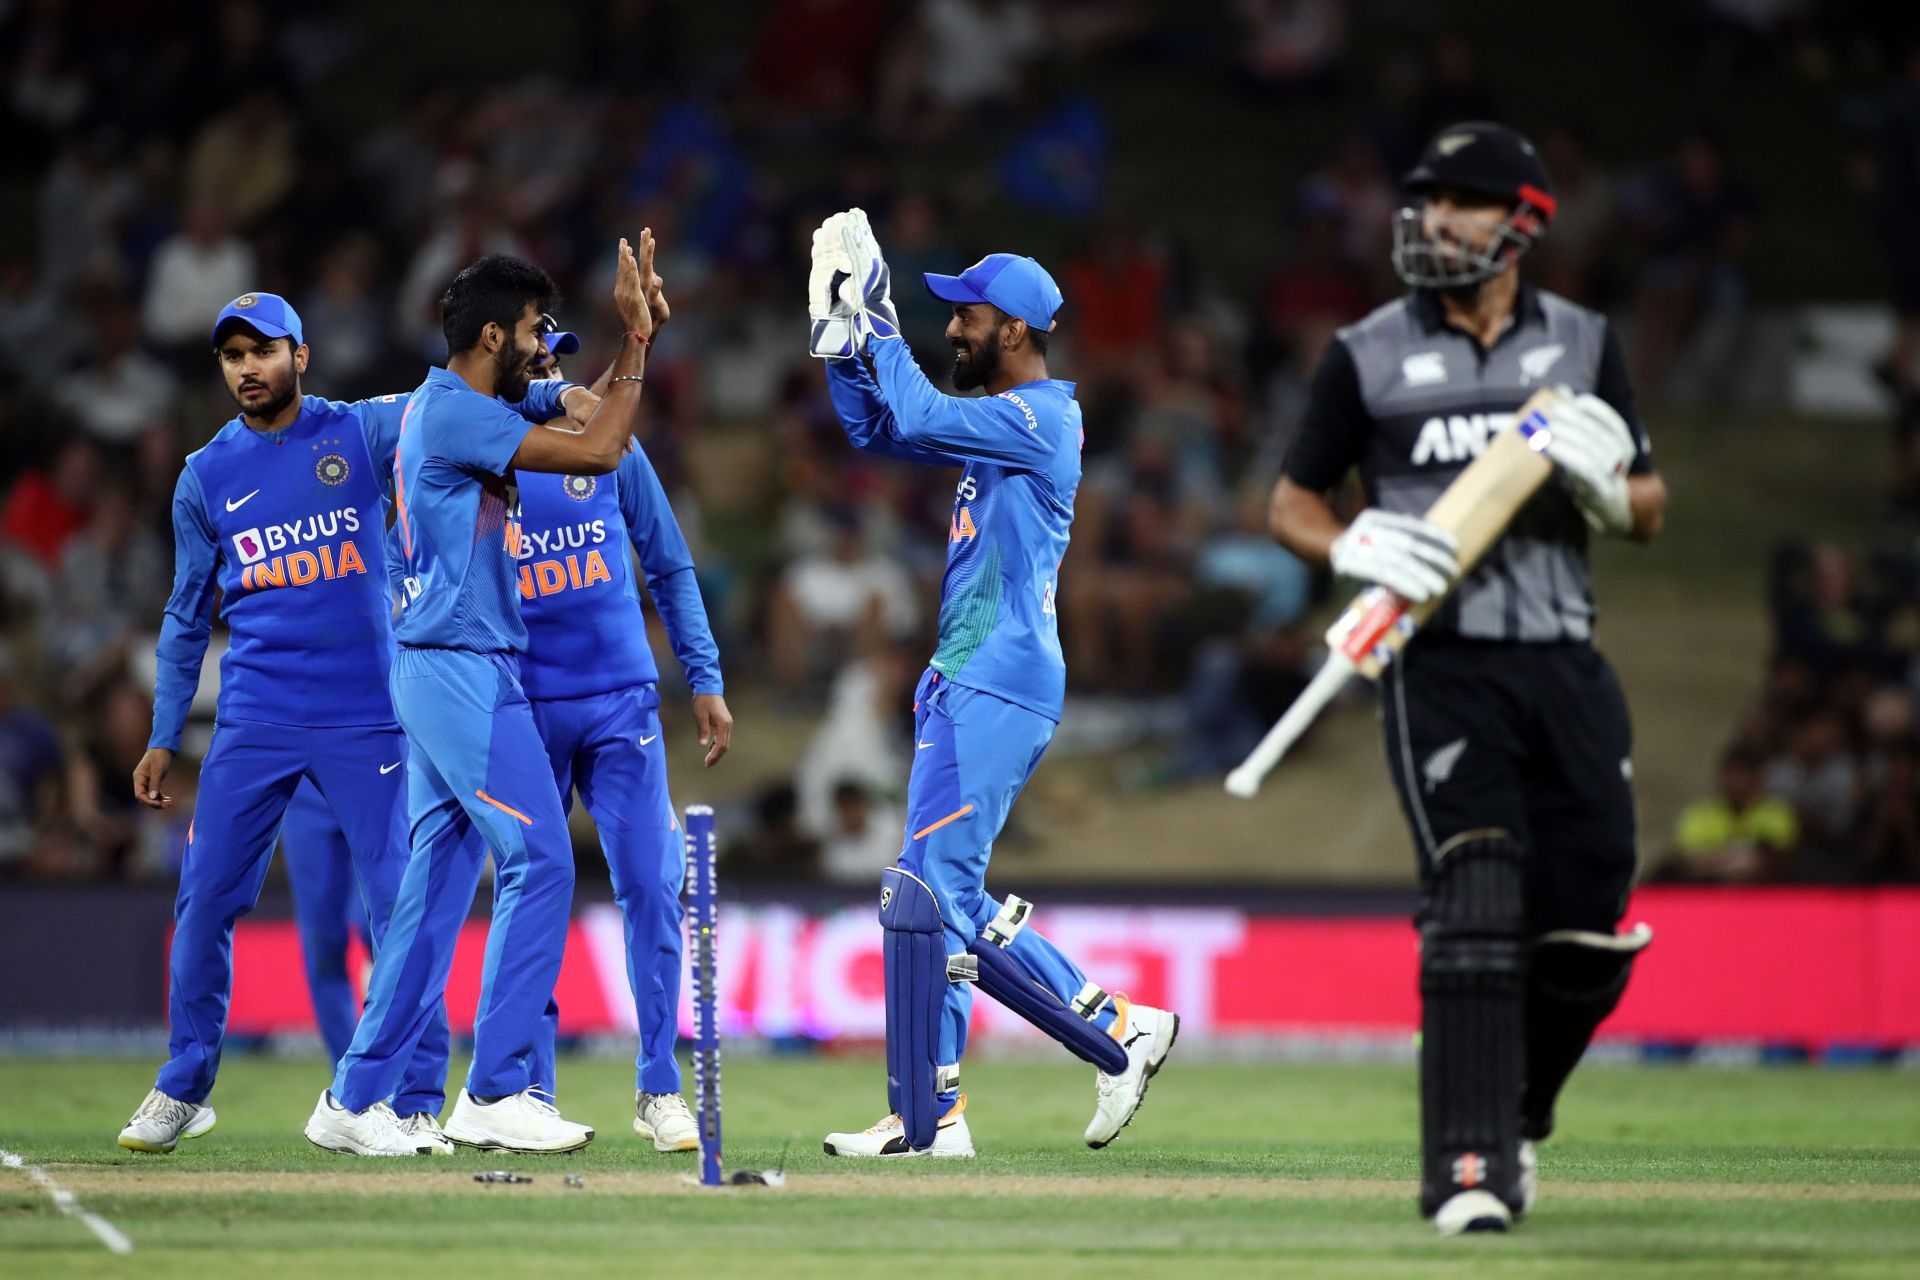 Can India beat New Zealand at the Dubai International Cricket Stadium tomorrow evening?